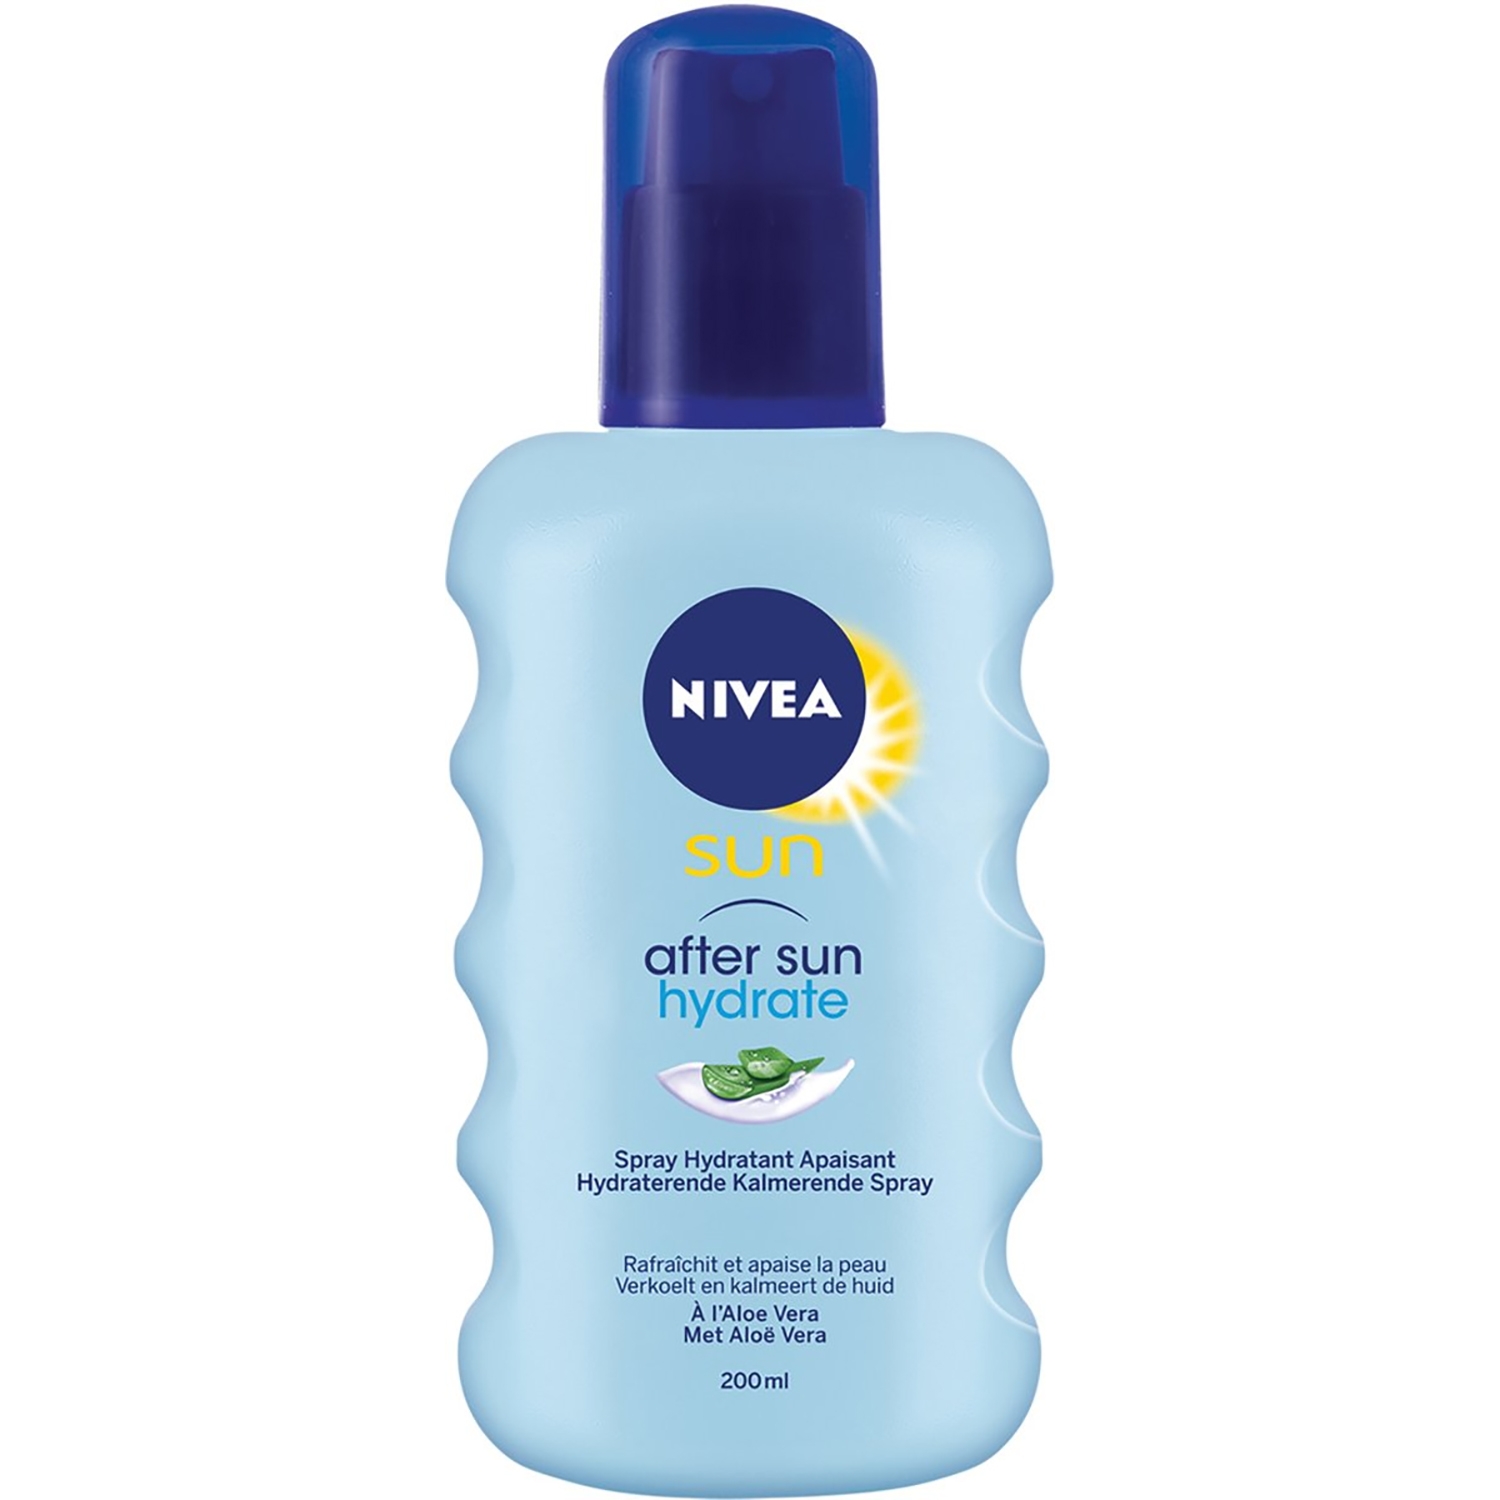 Nivea after sun spray hydrate - 200 ml